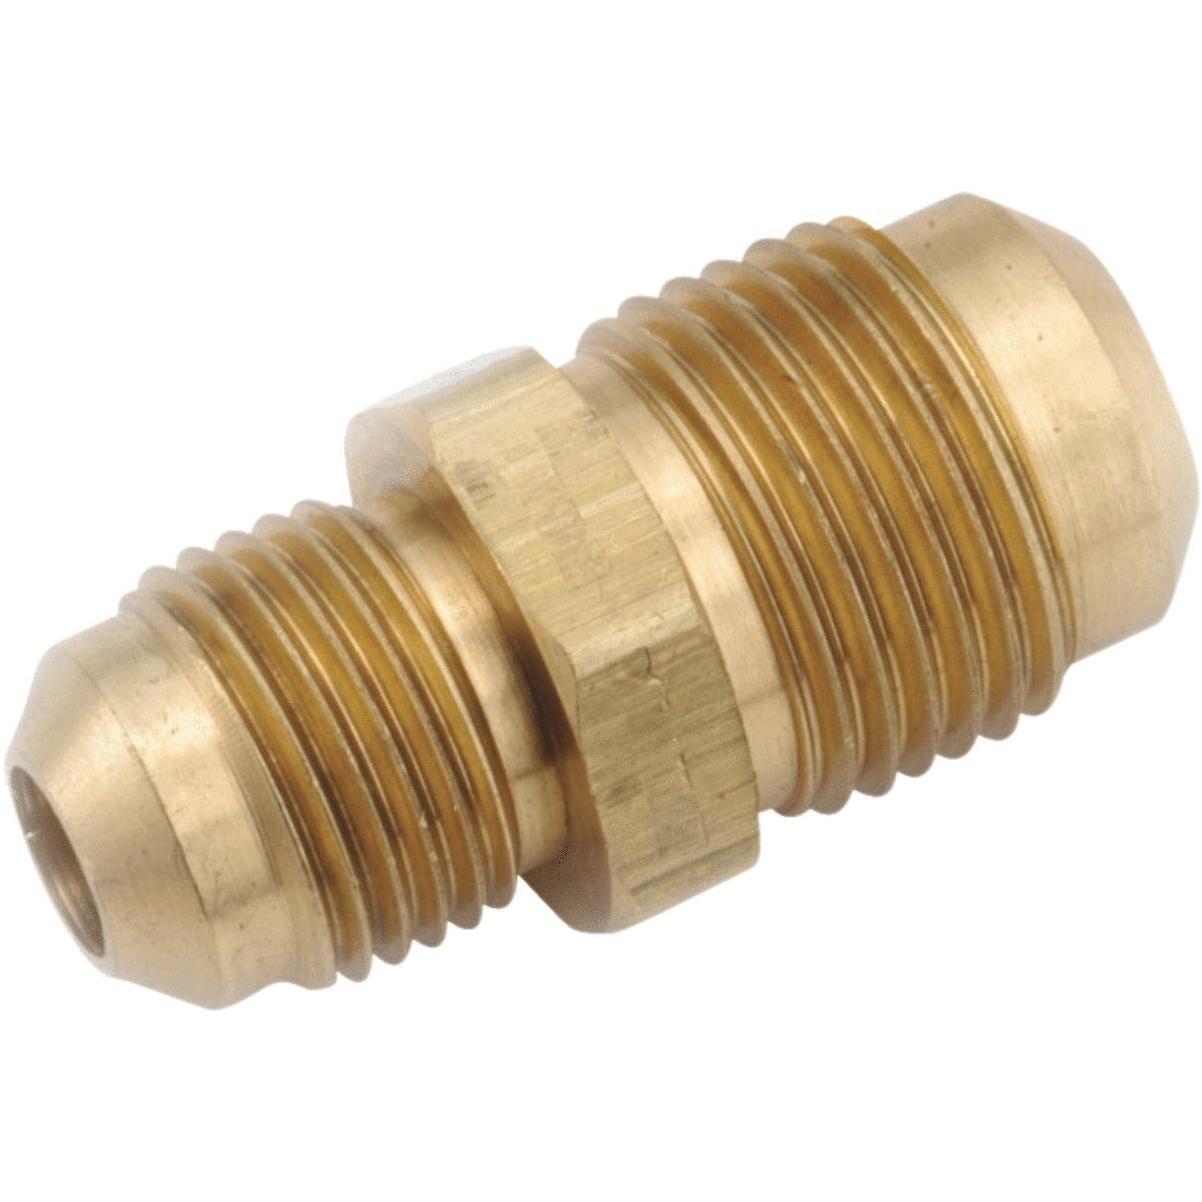 ANDERSON METALS 754039-10 5/8 Brass Flat Plug 